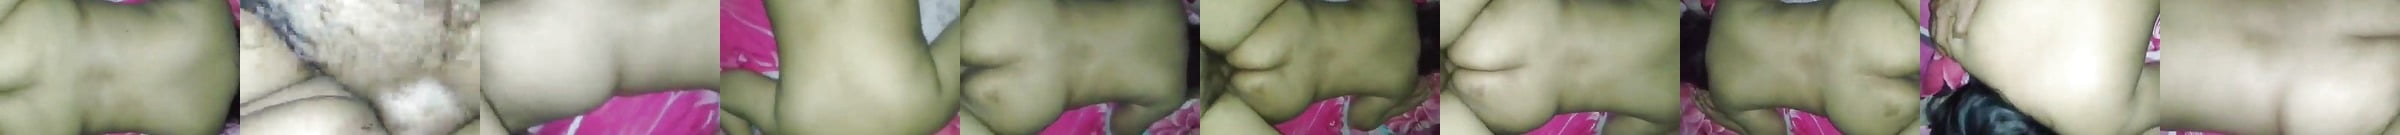 Ngeseks Memek Istri Basah Free Indonesian Hd Porn B8